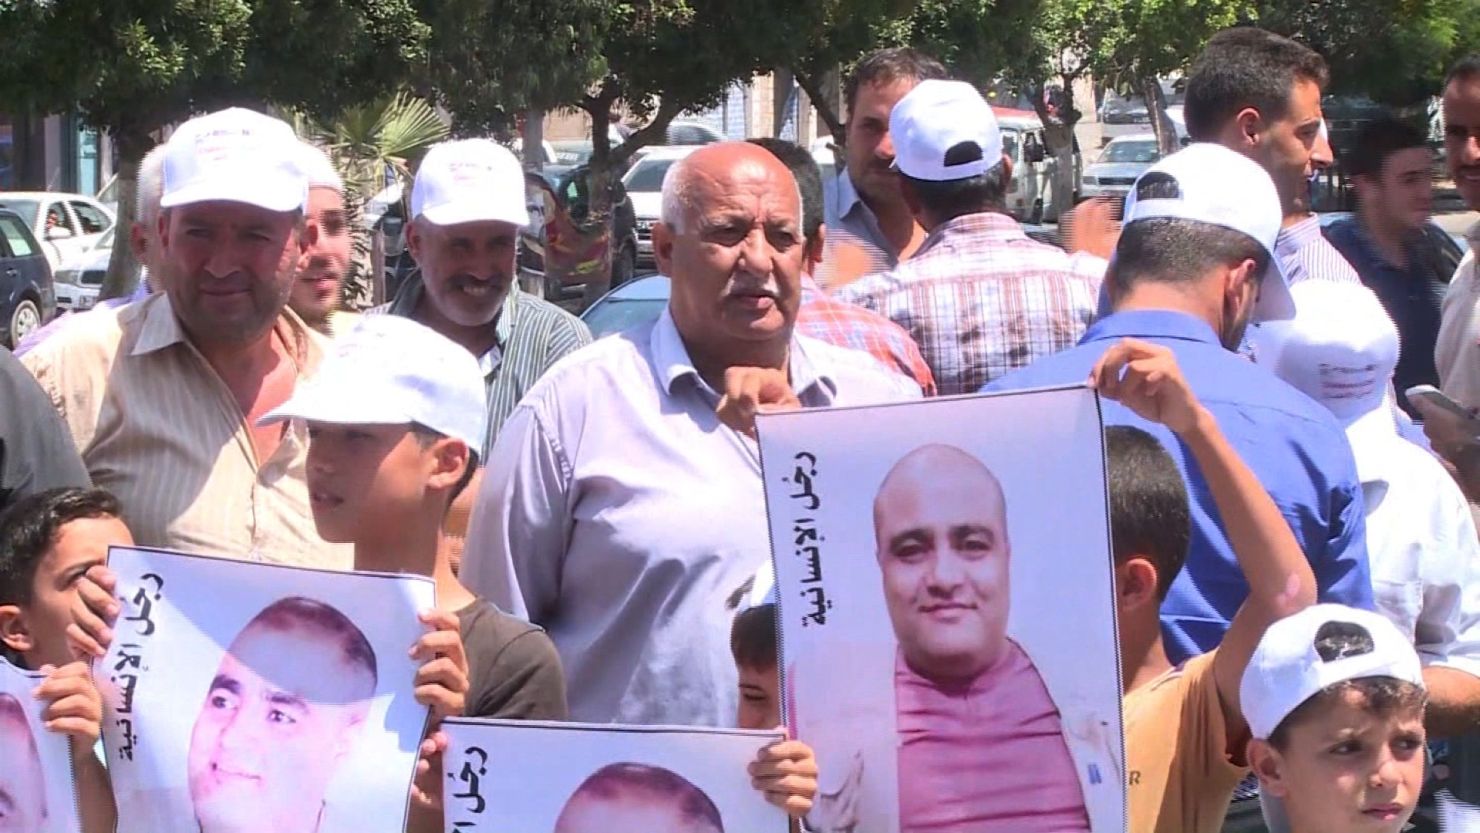 Gaza residents protest the arrest of Mohammad El-Halabi, the Gaza director of World Vision.